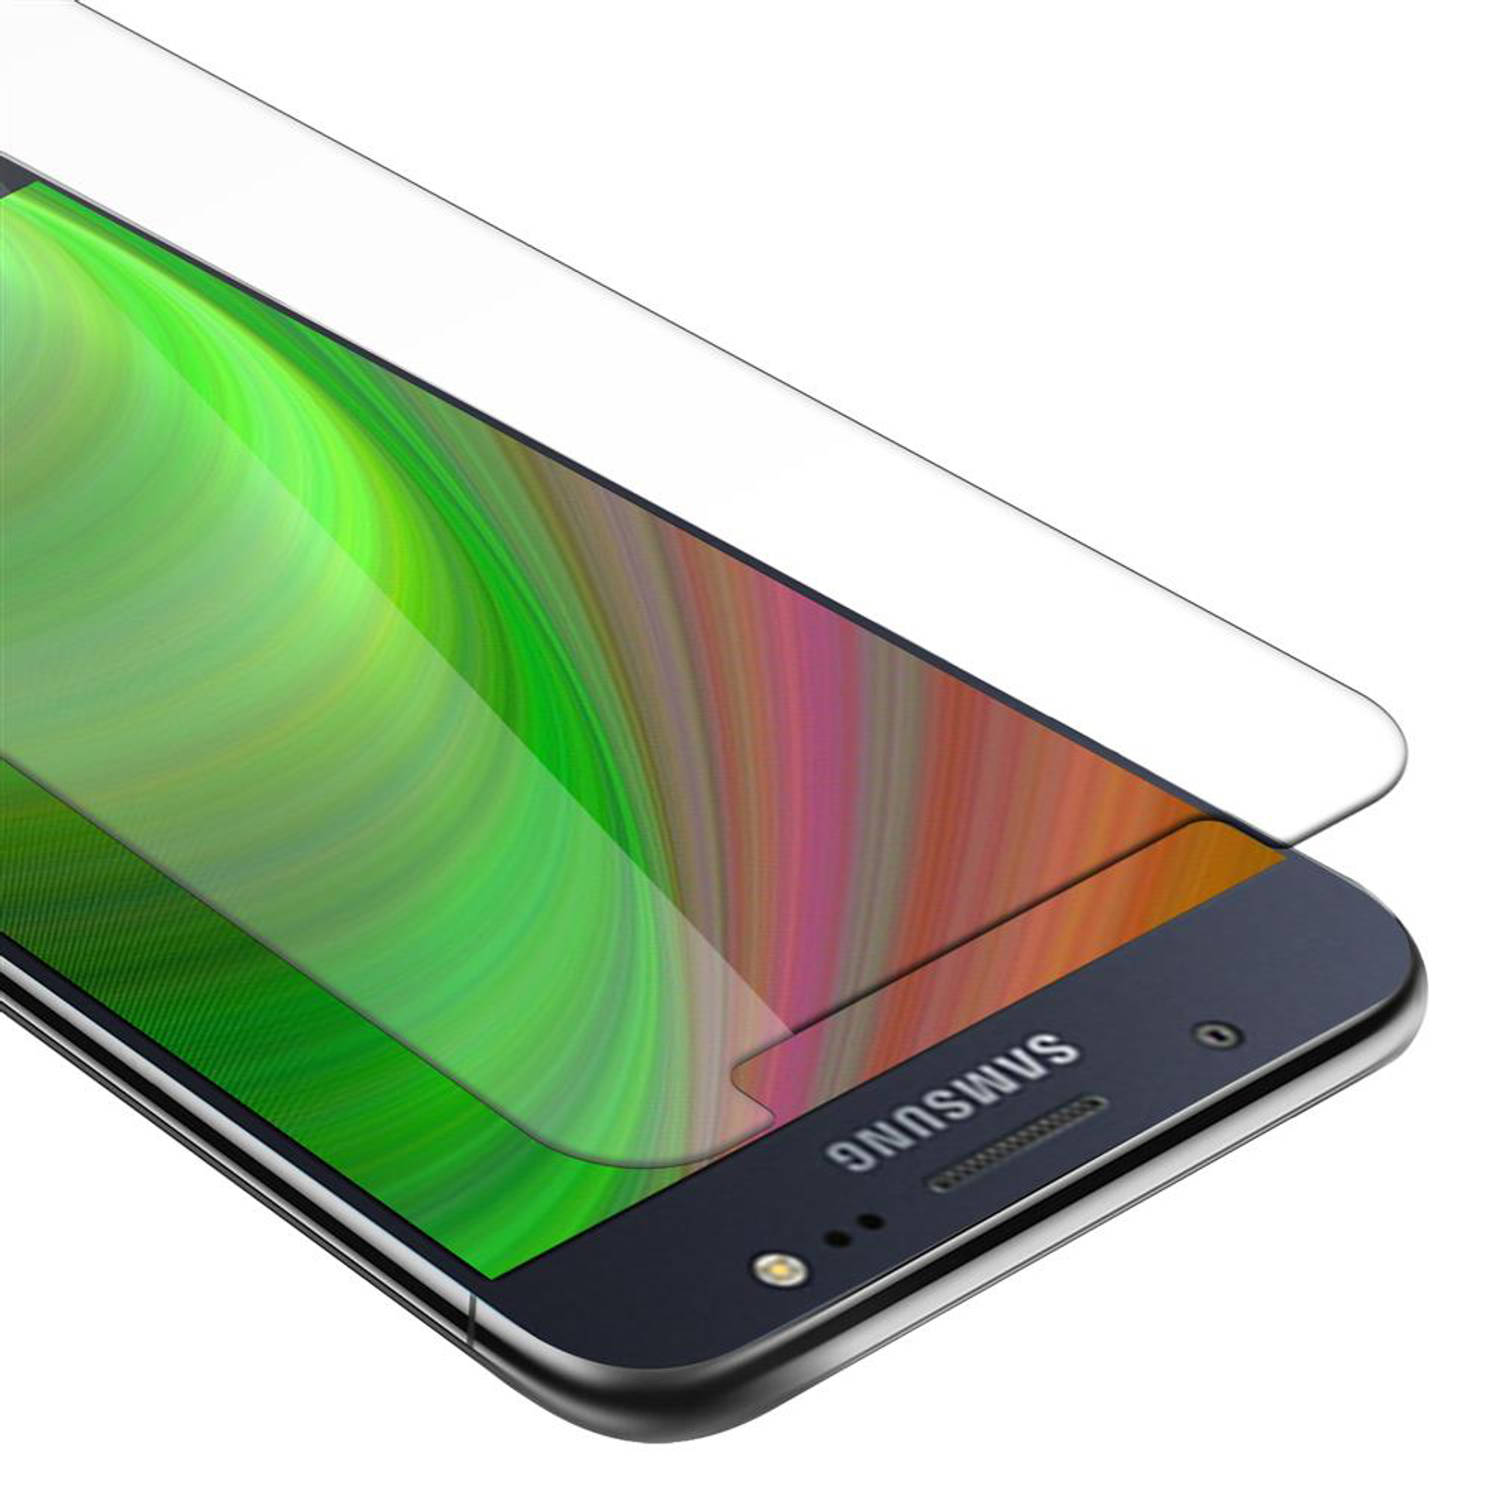 Cadorabo Pantser film voor Samsung Galaxy J5 2015 - Beschermende film in KRISTALHELDER - Geharde (Tempered) display beschermglas in 9H hardheid met 3D Touch